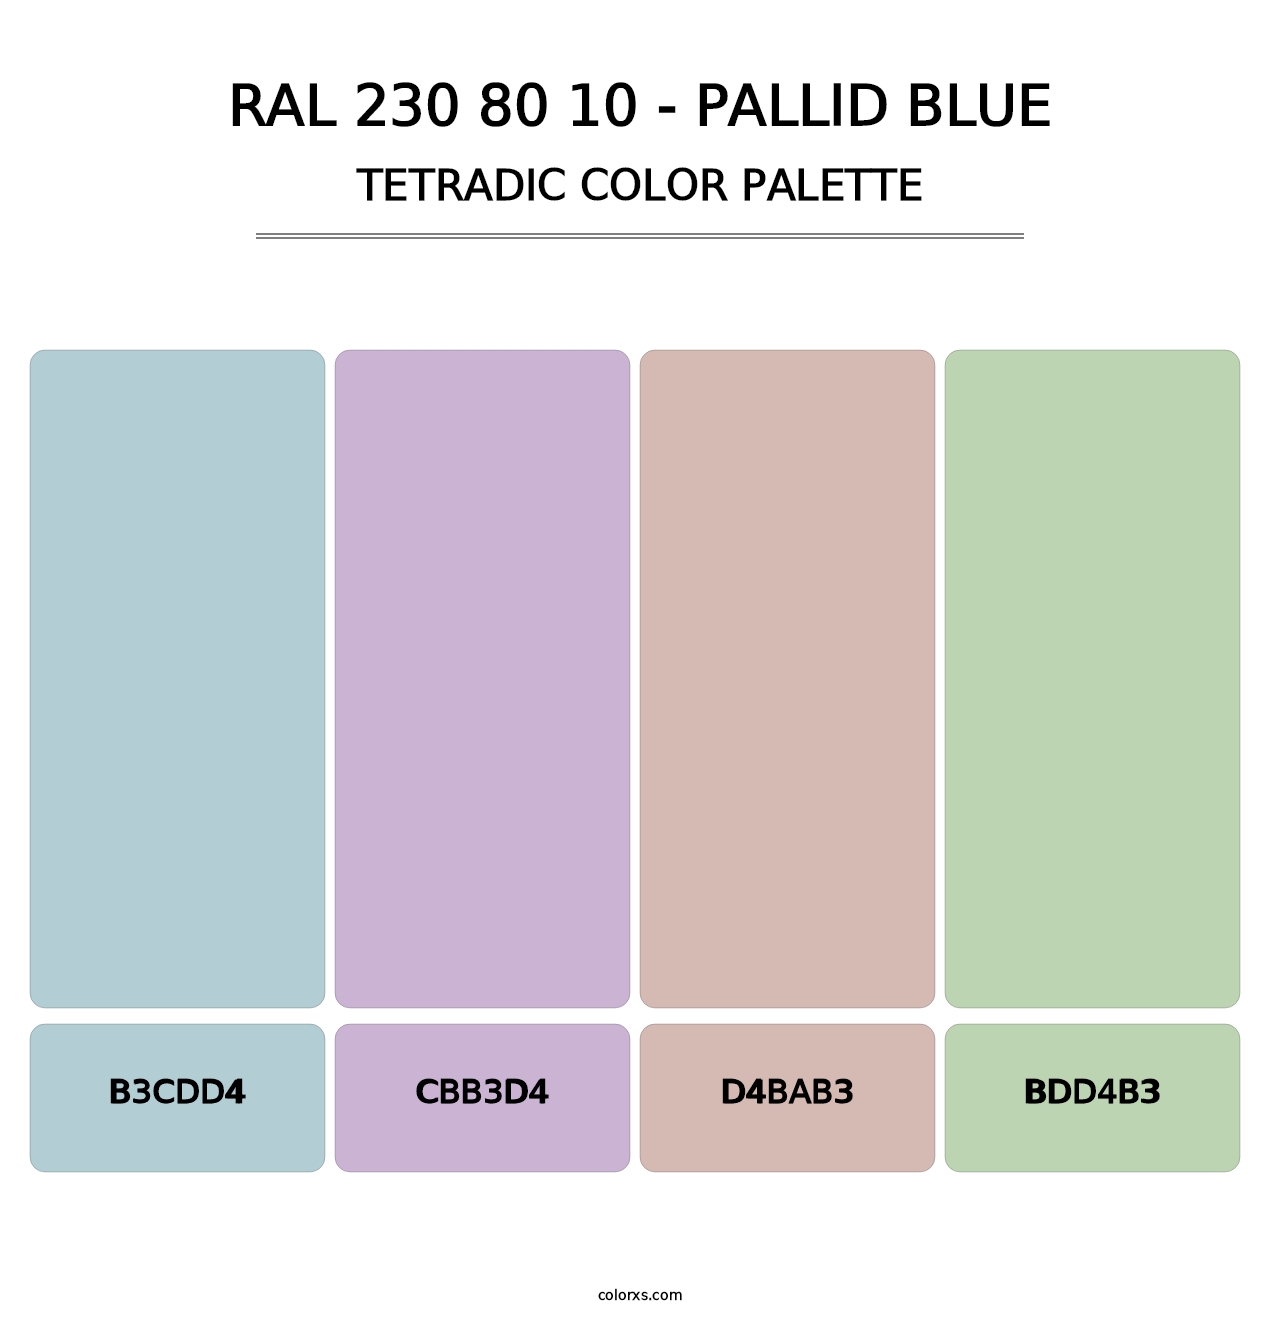 RAL 230 80 10 - Pallid Blue - Tetradic Color Palette